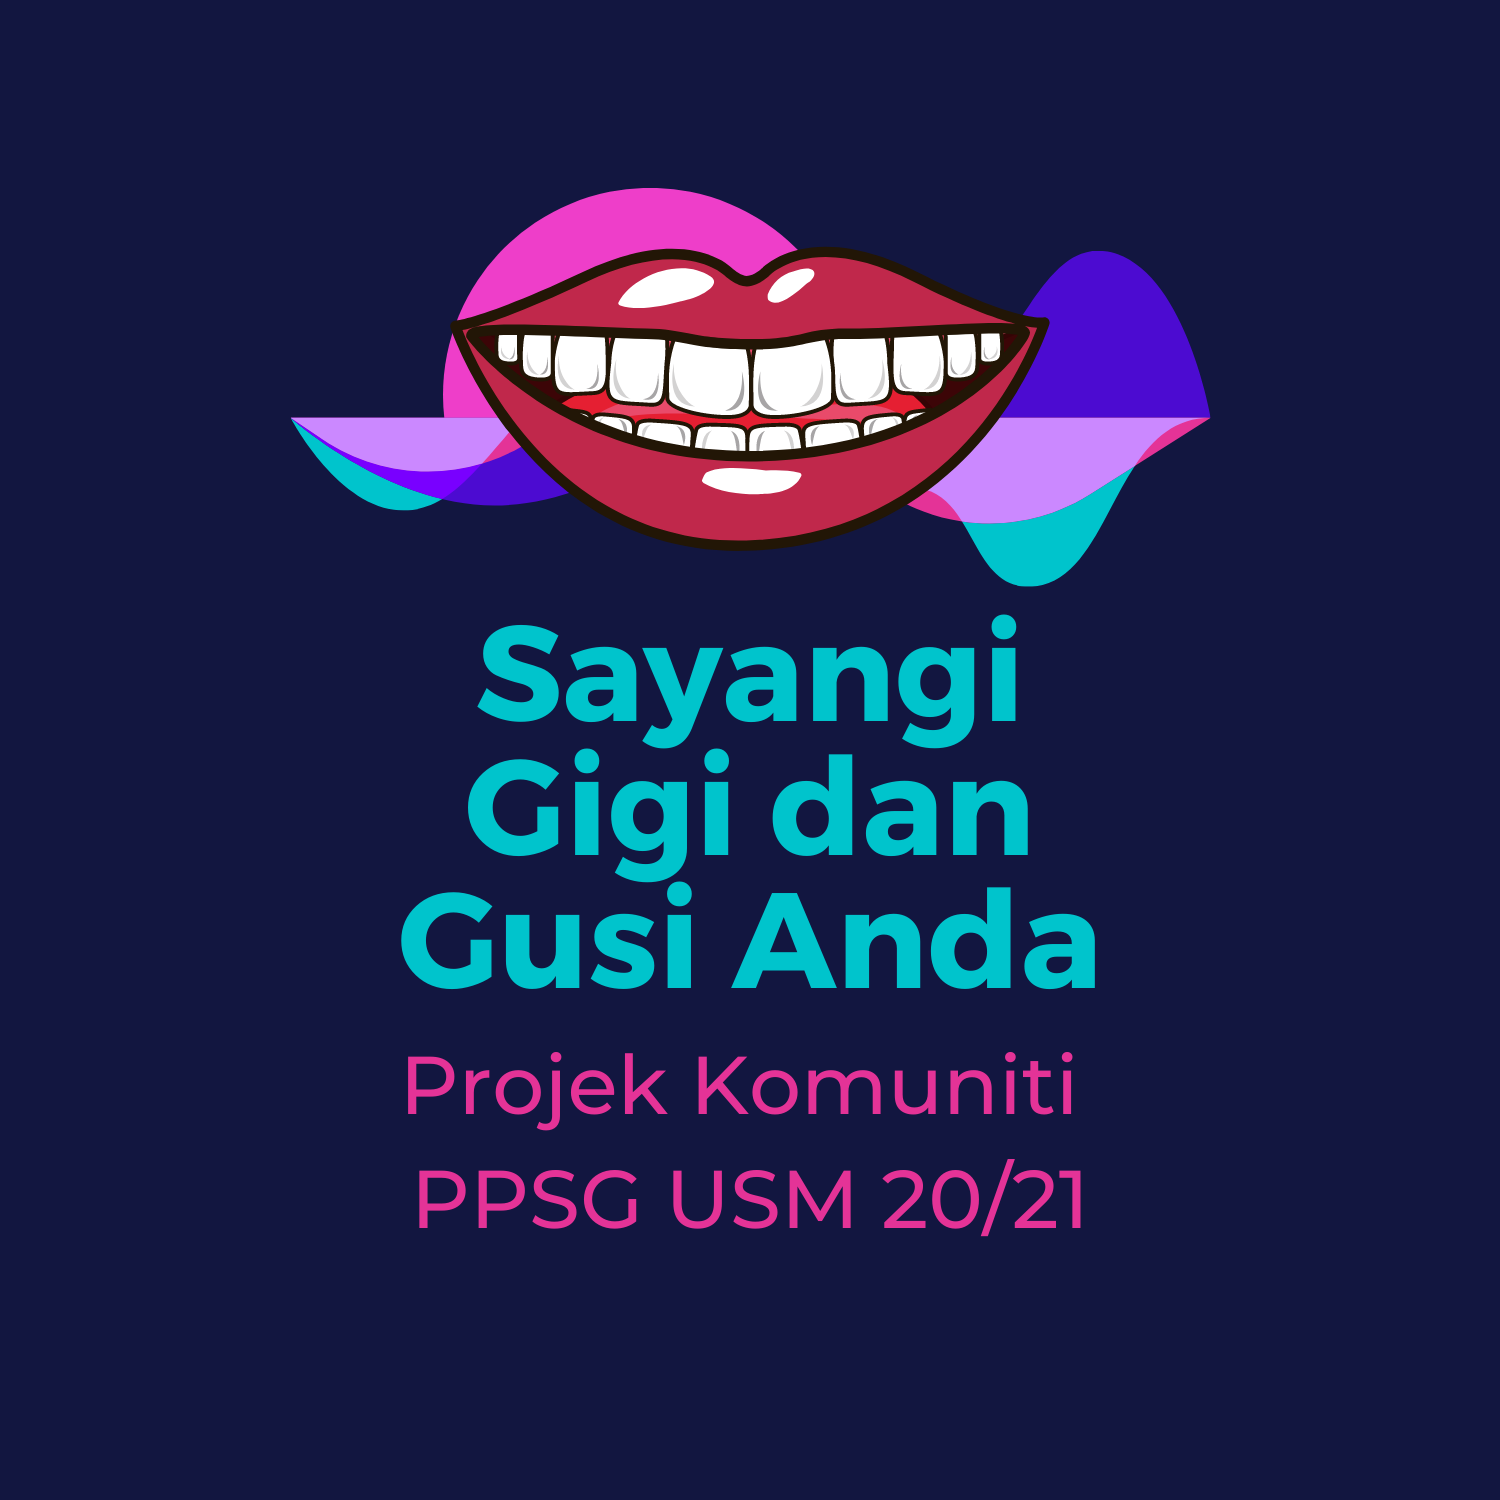 ​Projek Komuniti MDPH USM 2020/2021 Sayangi Gigi dan Gusi Anda